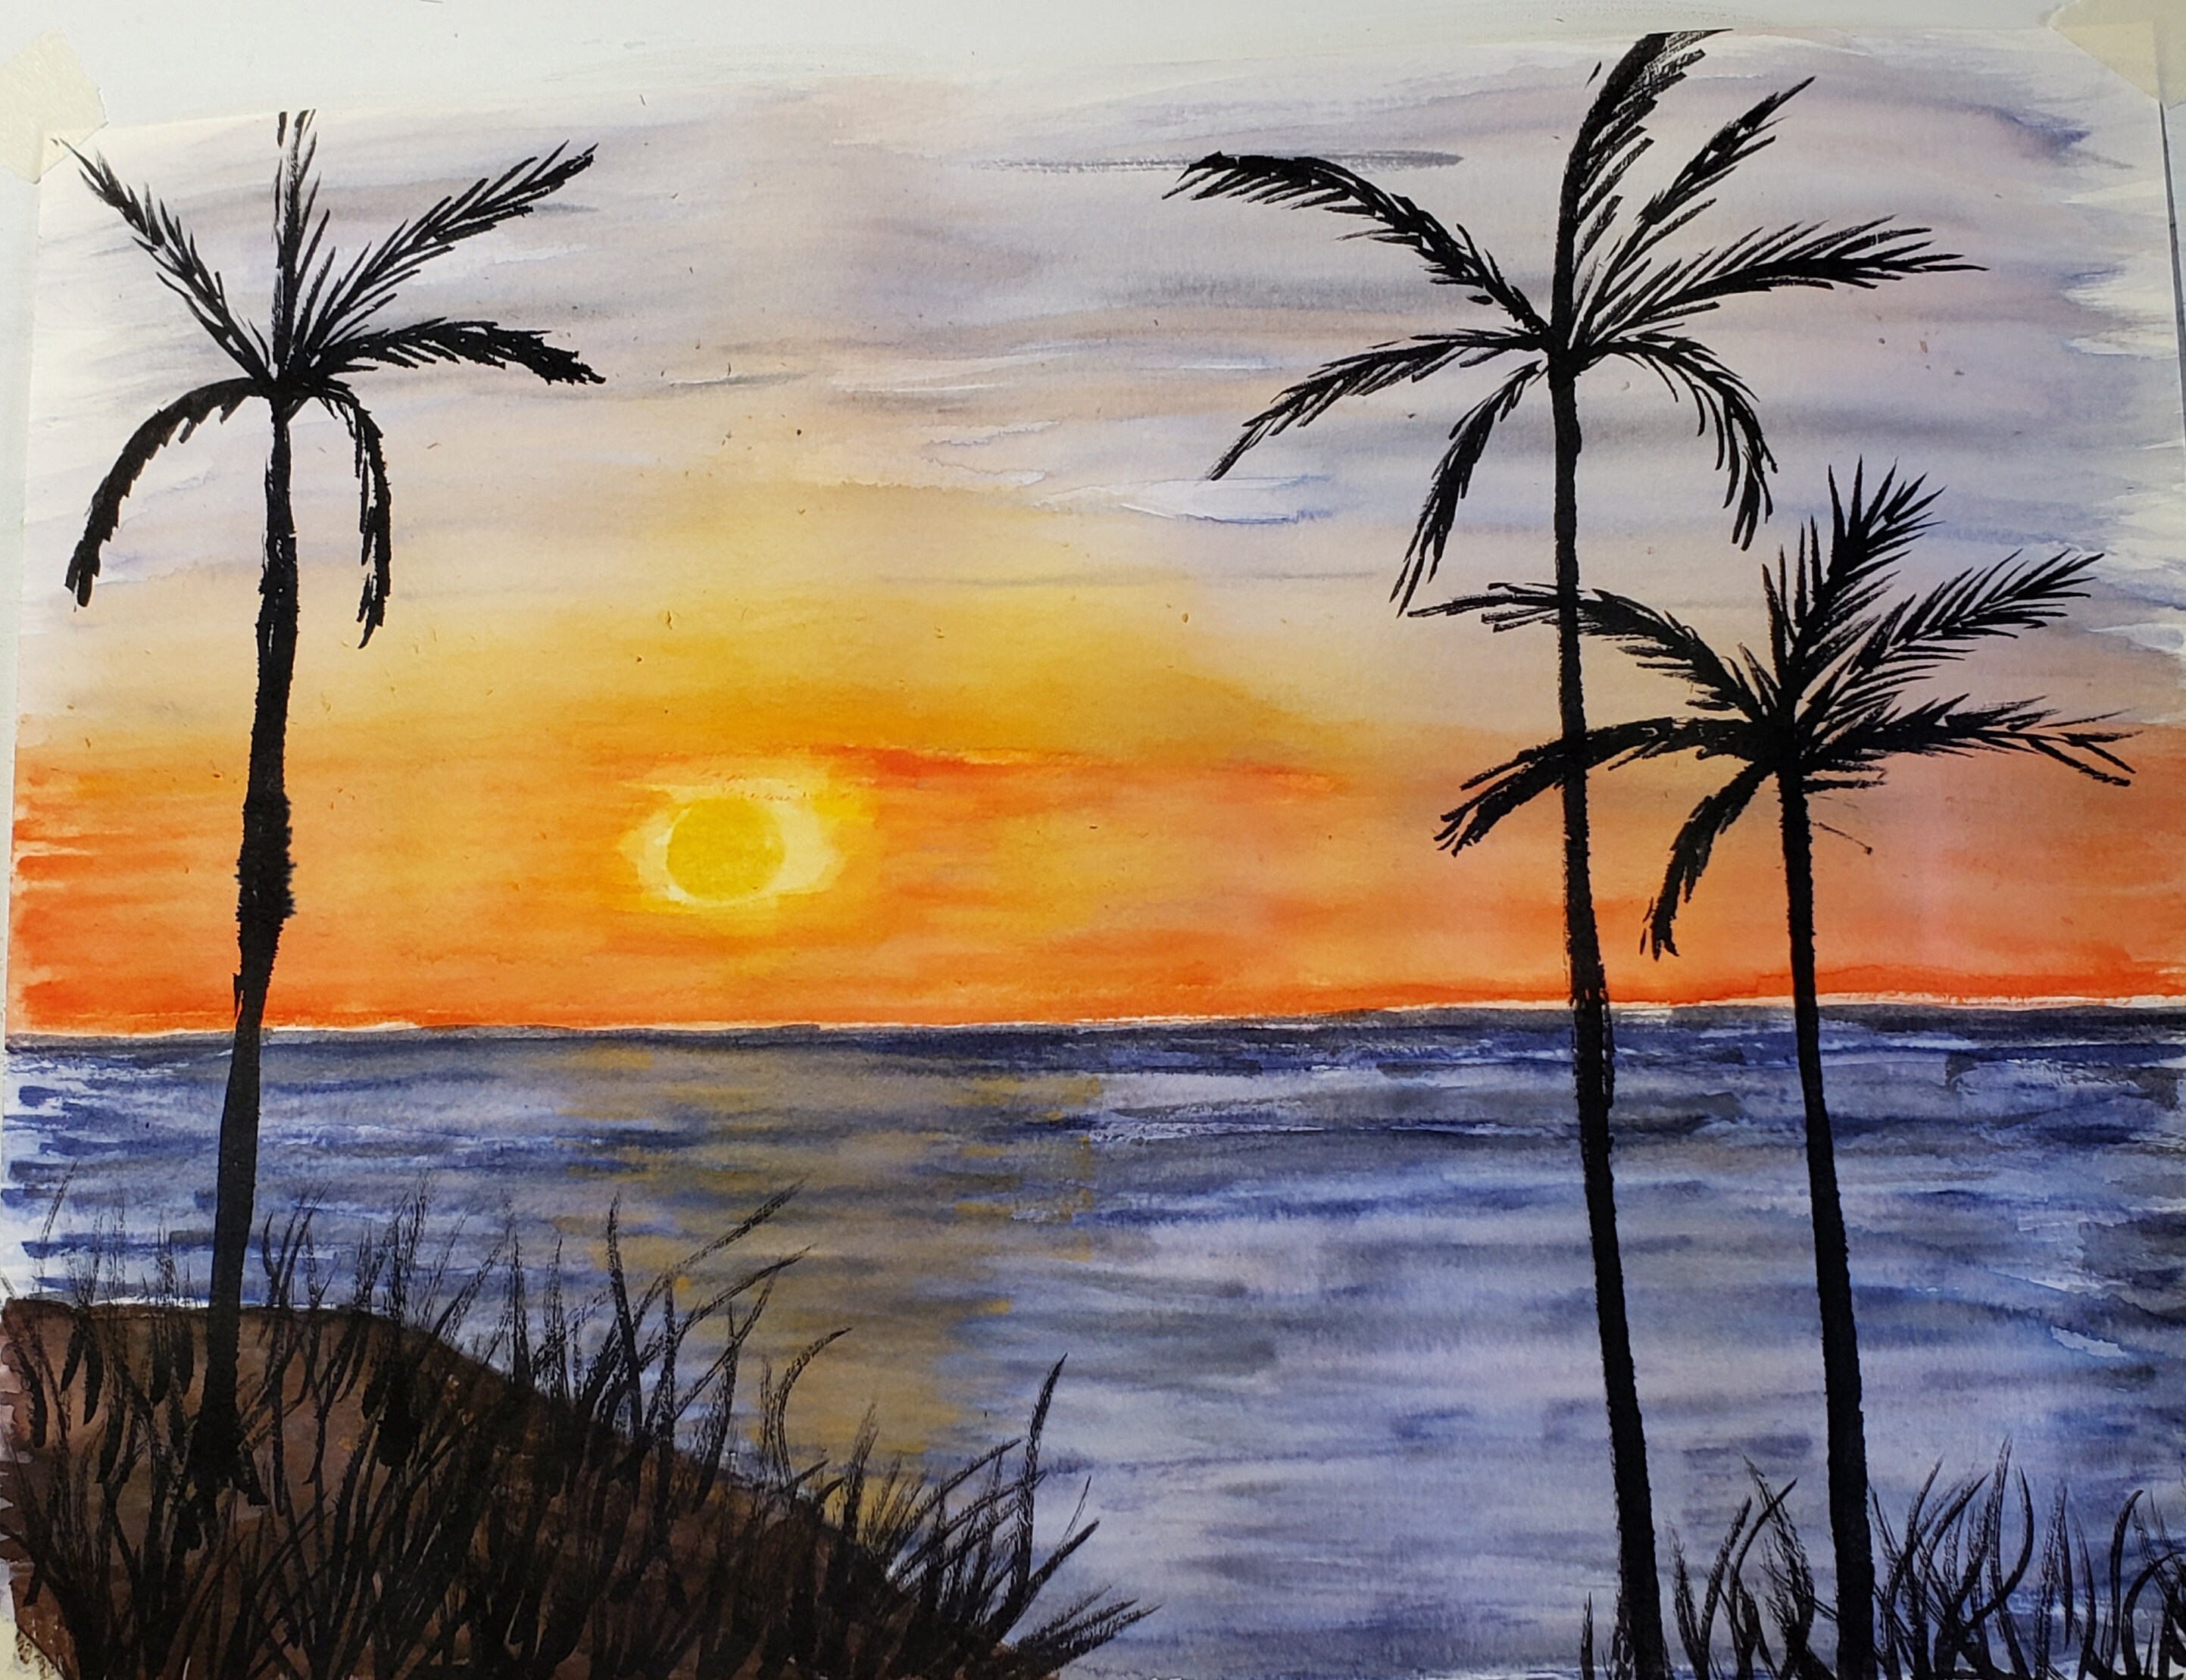 California lighhouse original watercolor painting gift idea palm trees tropical beach sea sunset coastal landscape ocean wall art